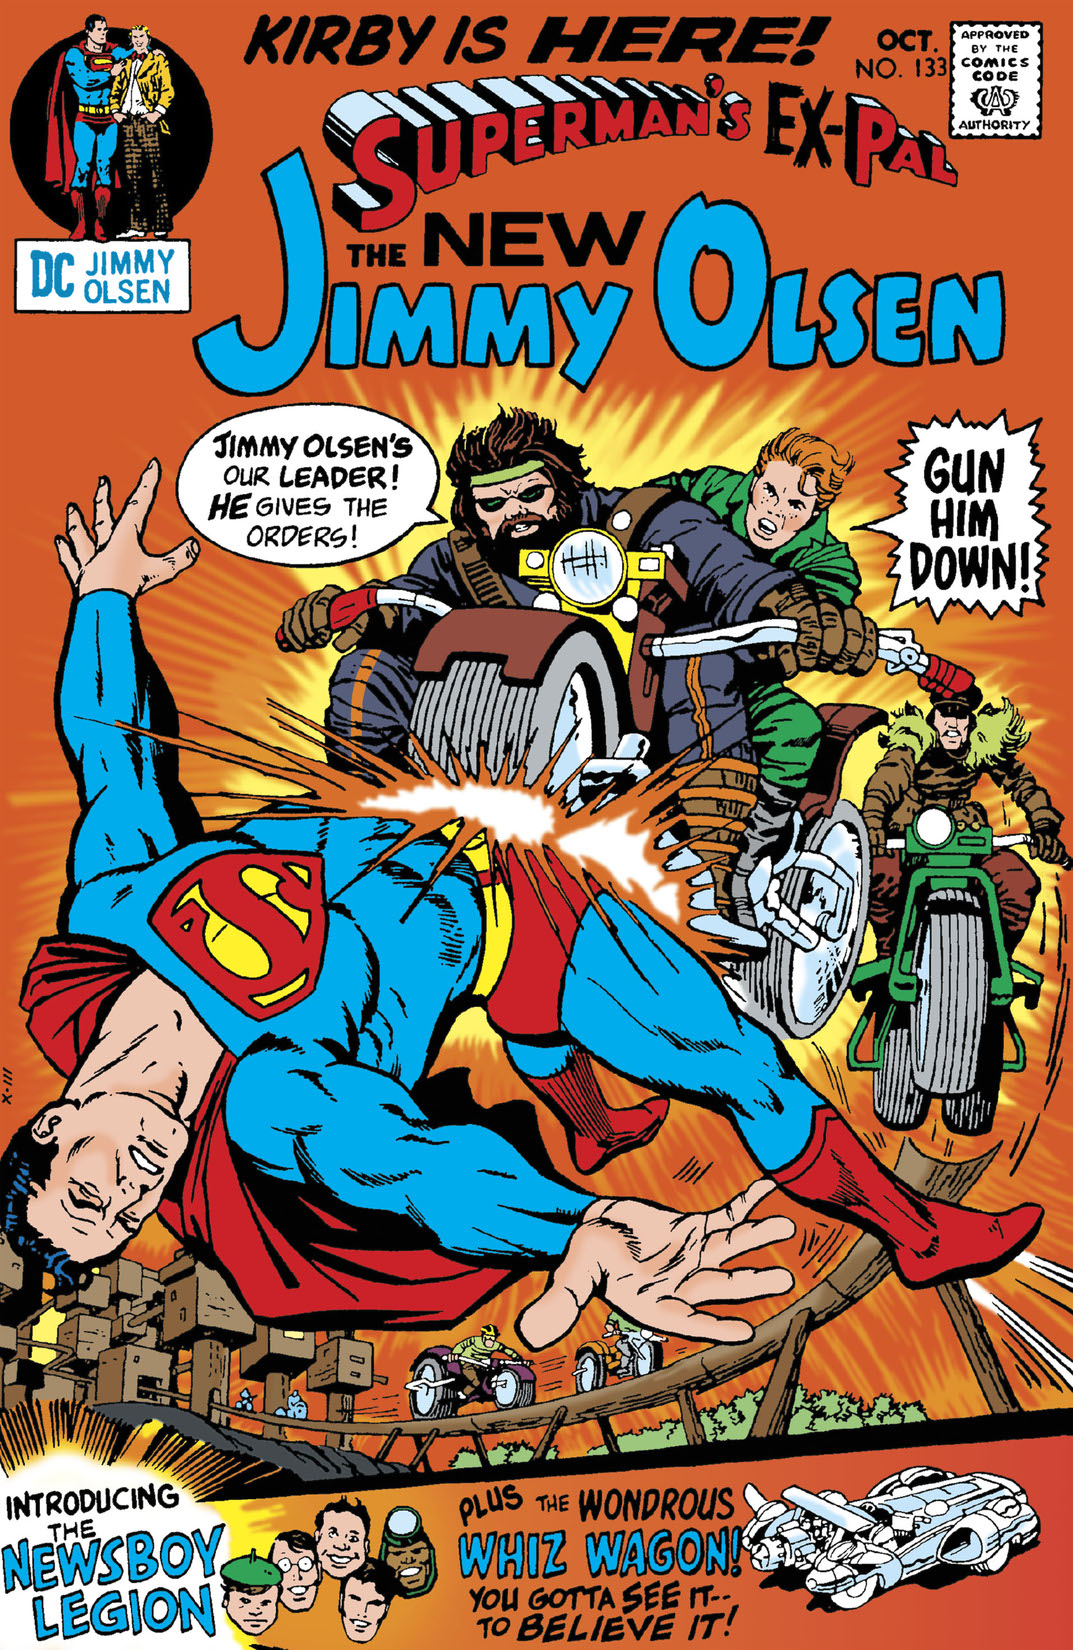 Superman's Pal, Jimmy Olsen #133 preview images